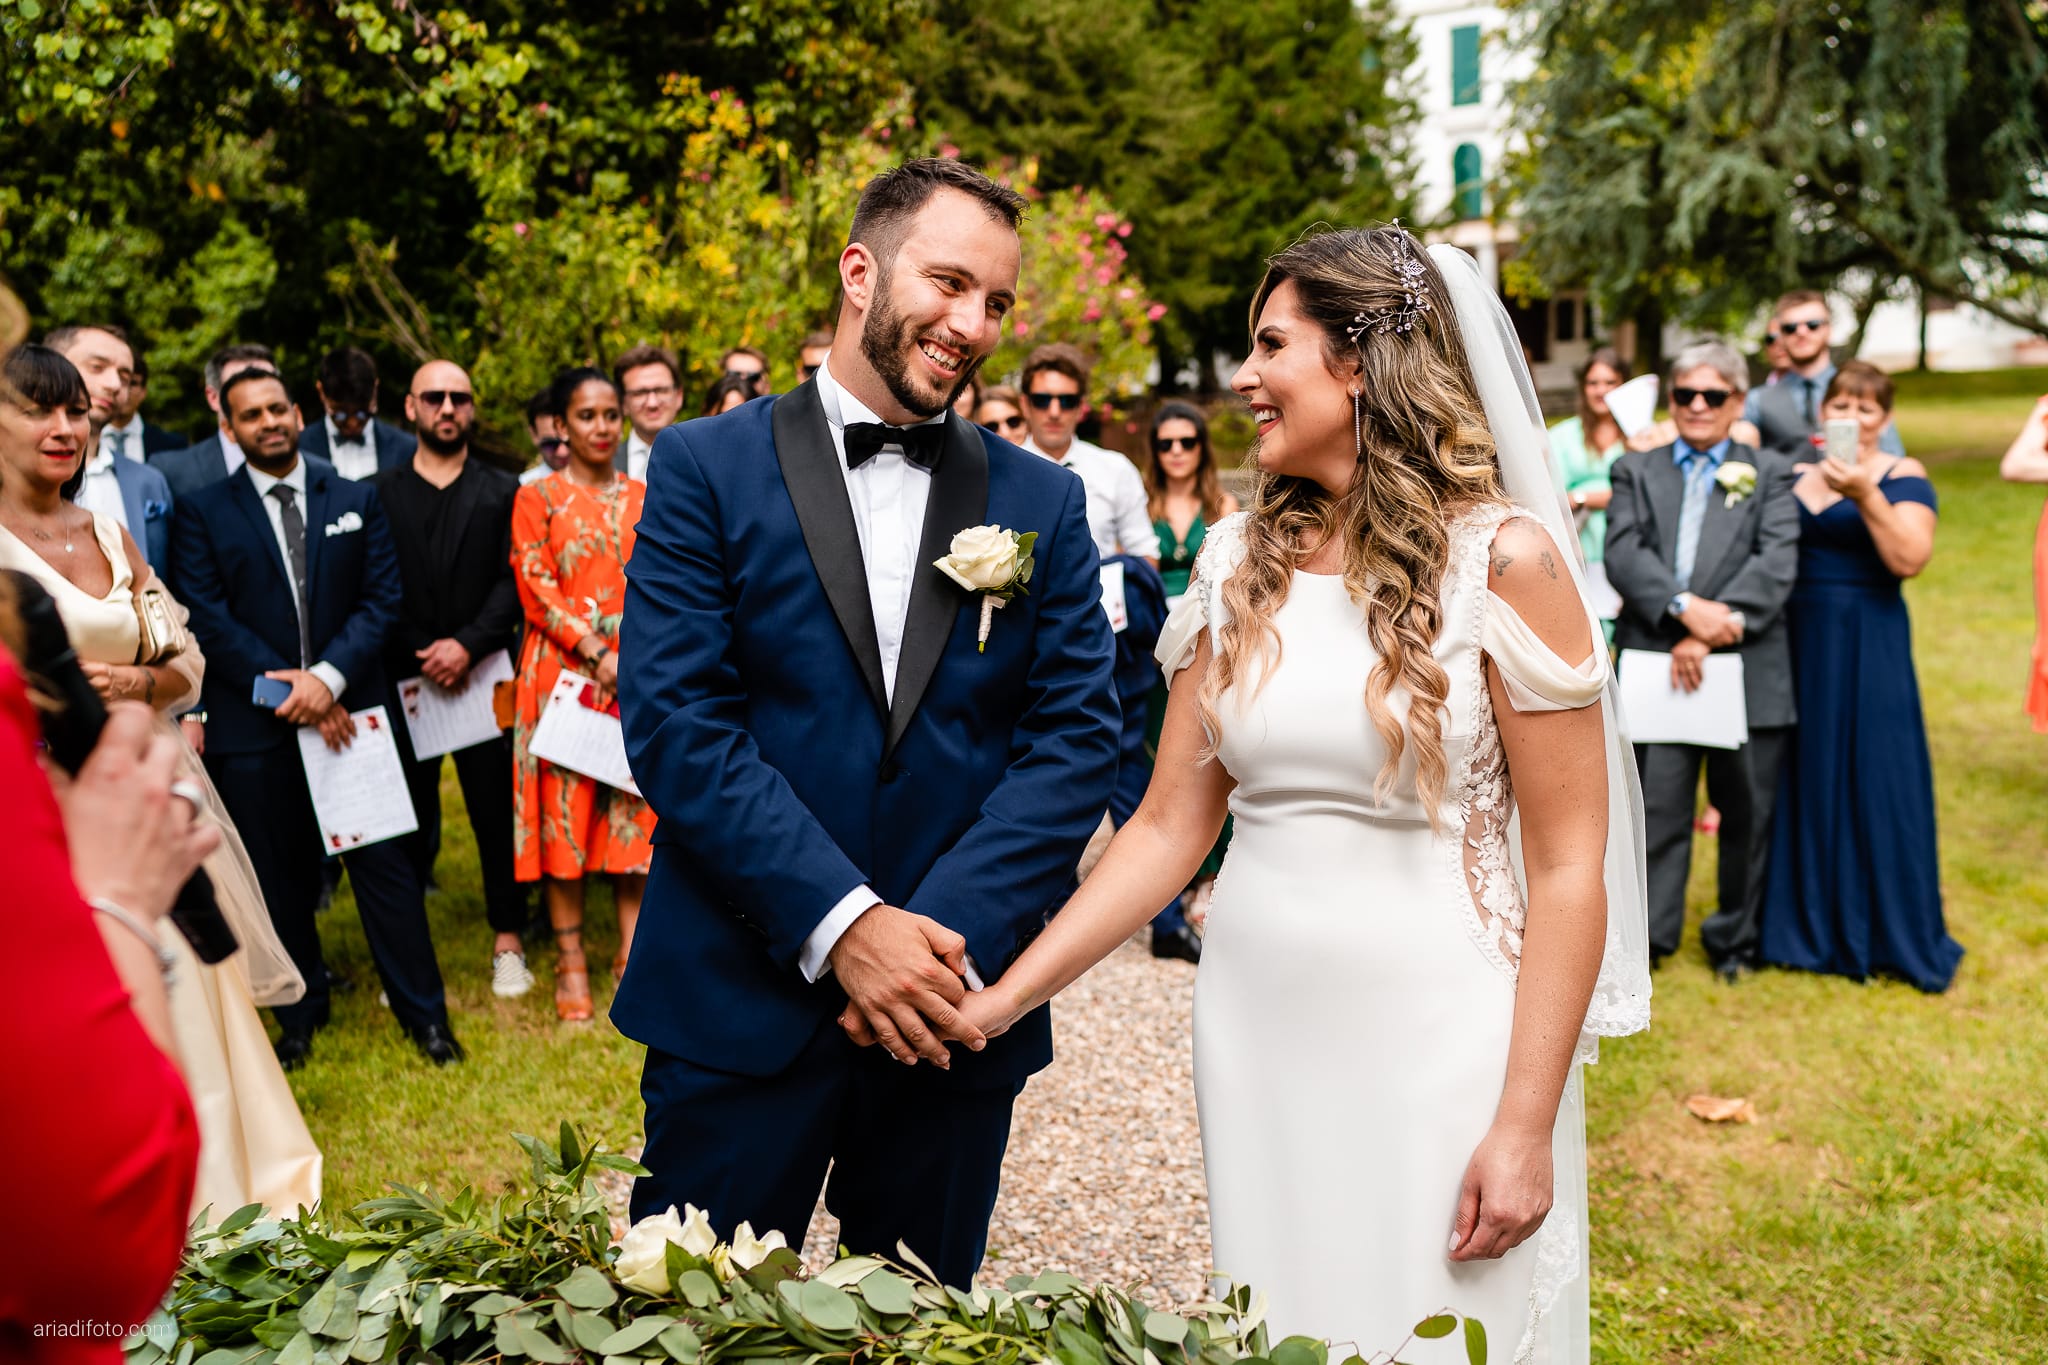 Mariana Nicholas Matrimonio da Sogno a Castelvecchio Sagrado Gorizia cerimonia all'aperto civile sposi